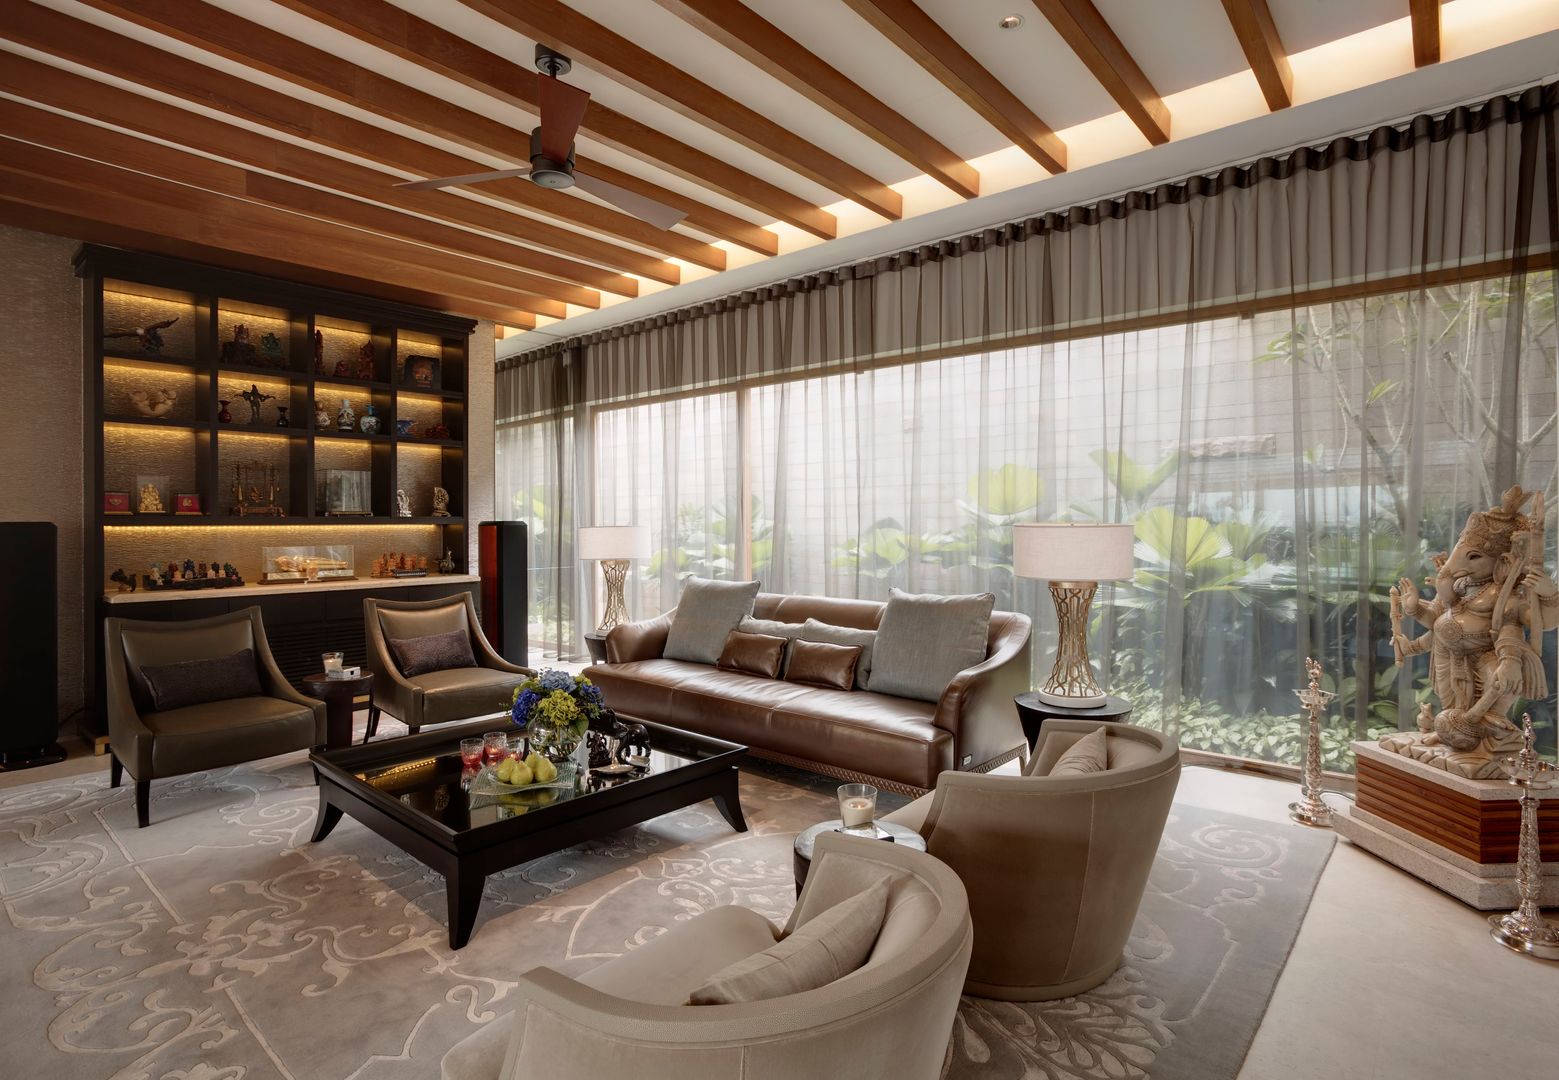 Luxurious Tropical Home, ANSANA ANSANA Гостиная в тропическом стиле